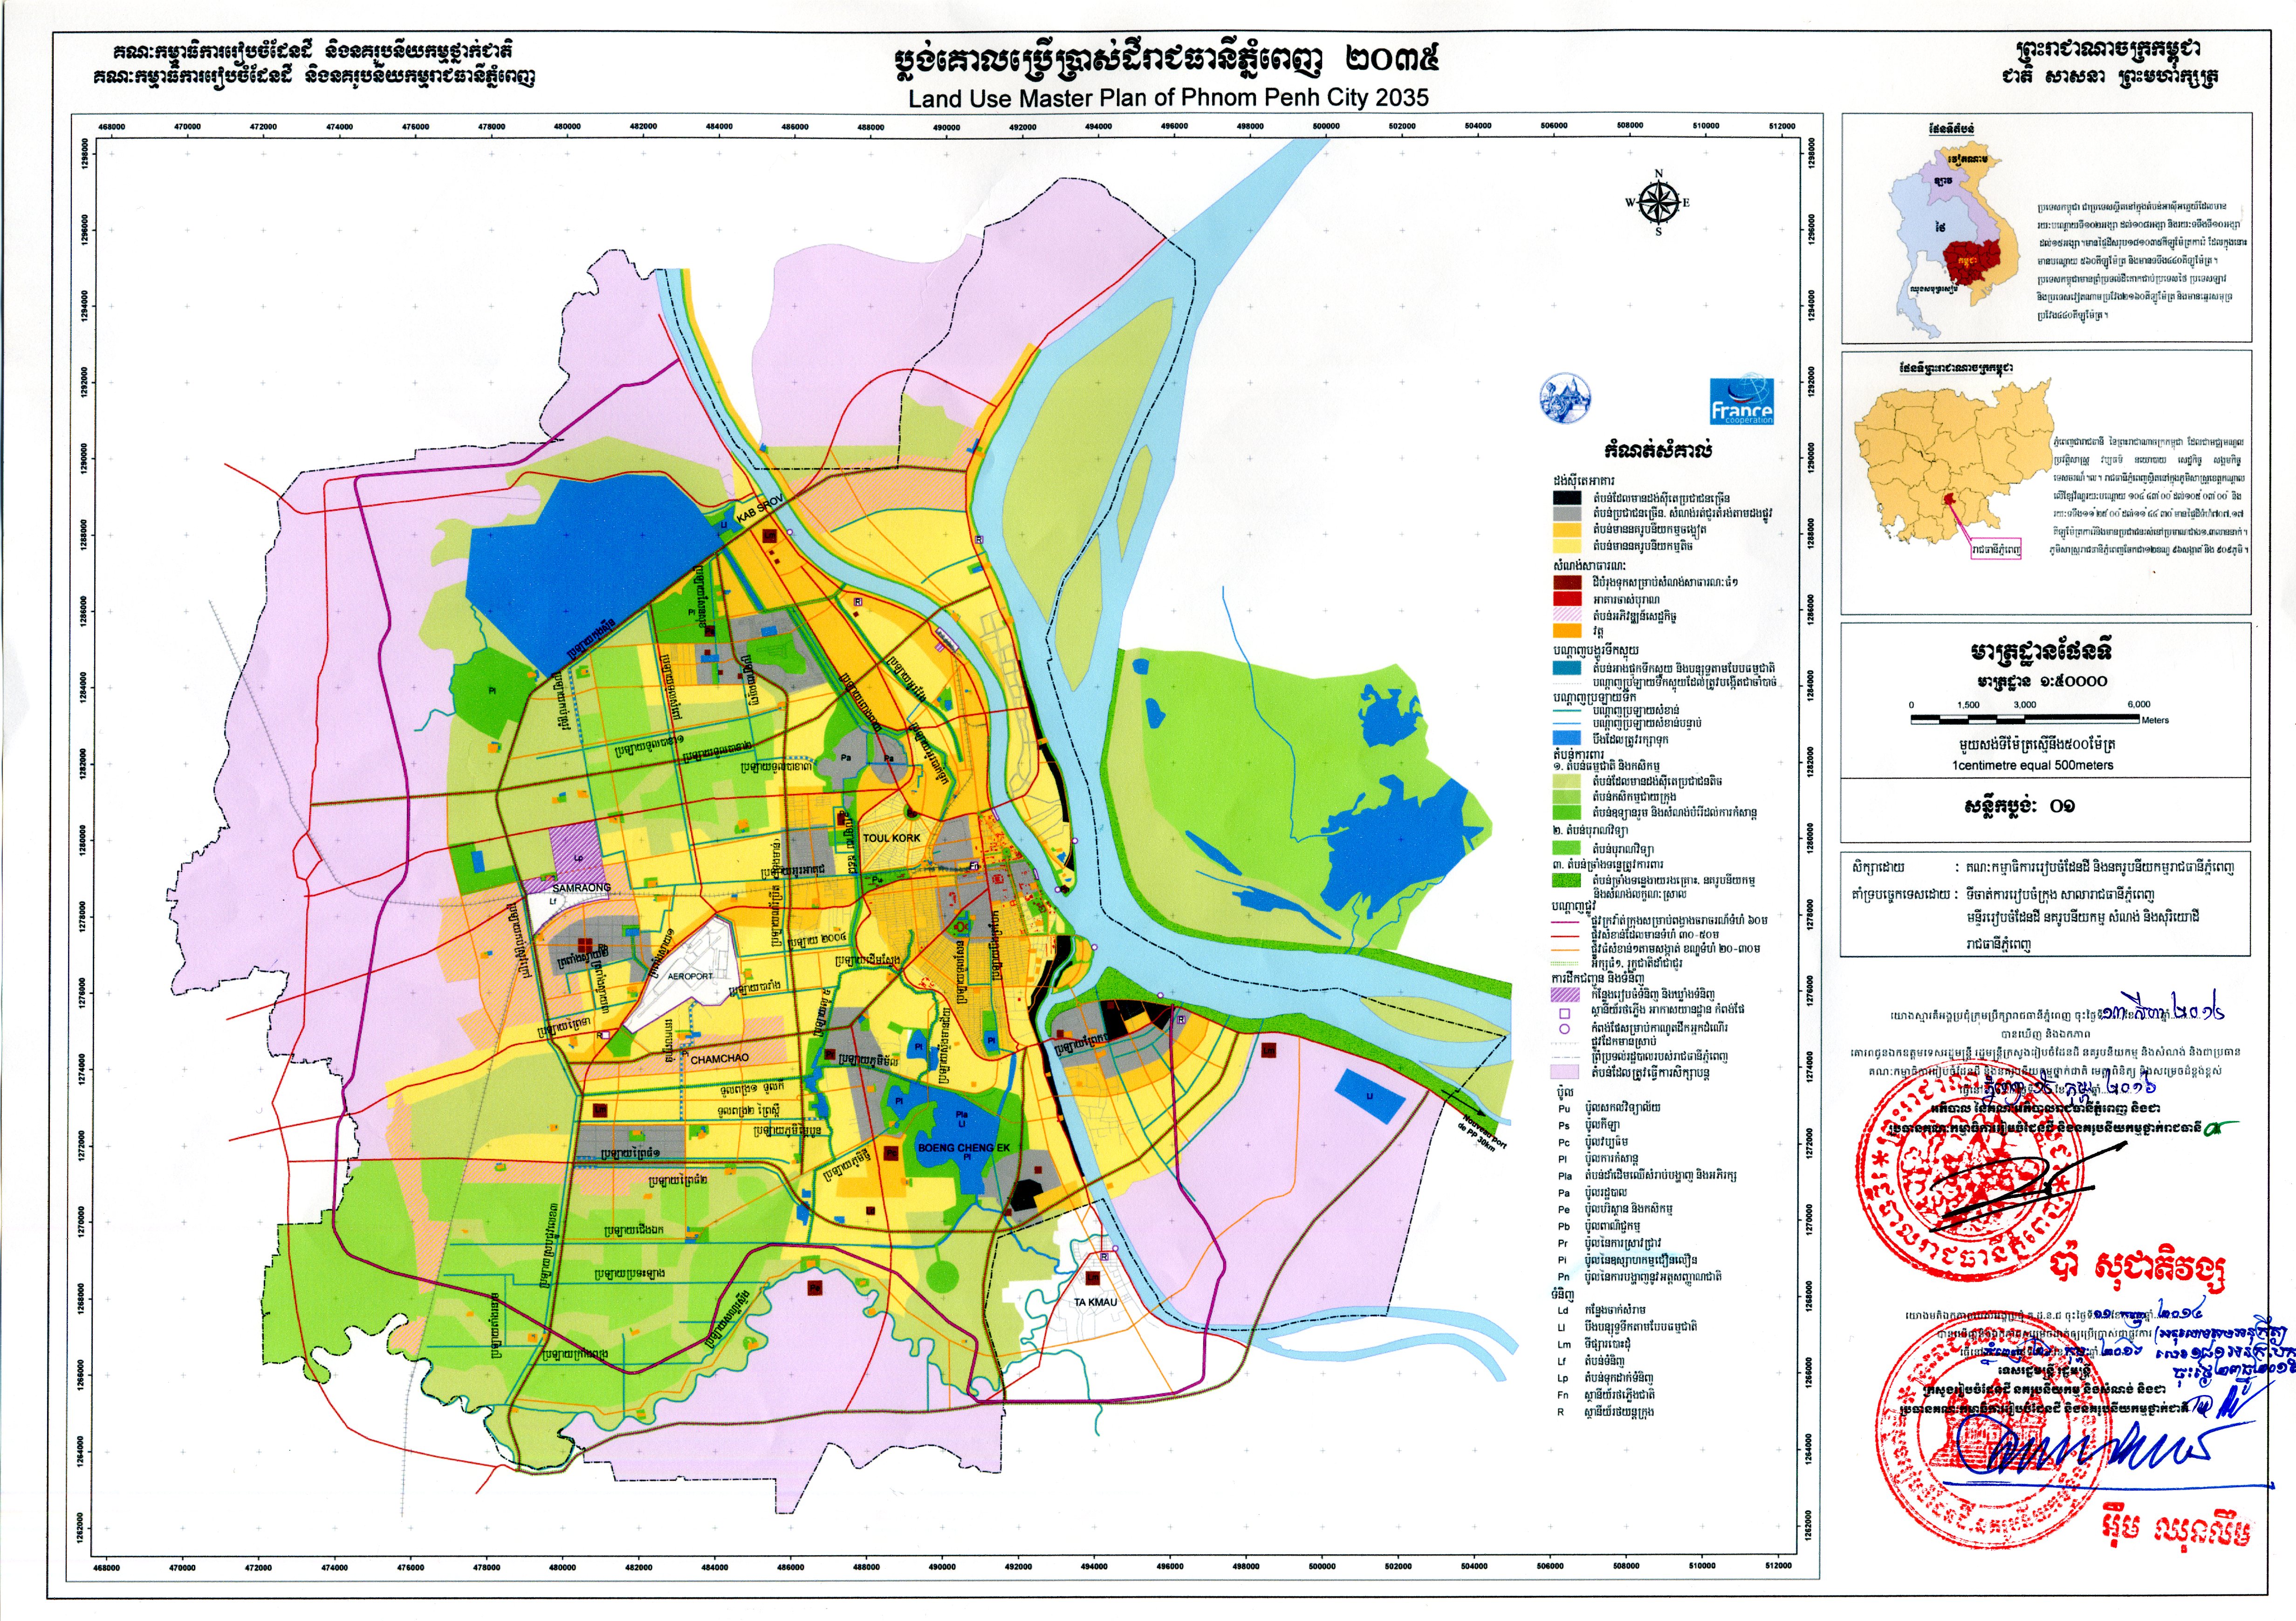 Phnom Penh Land Use Master Plan 2035 